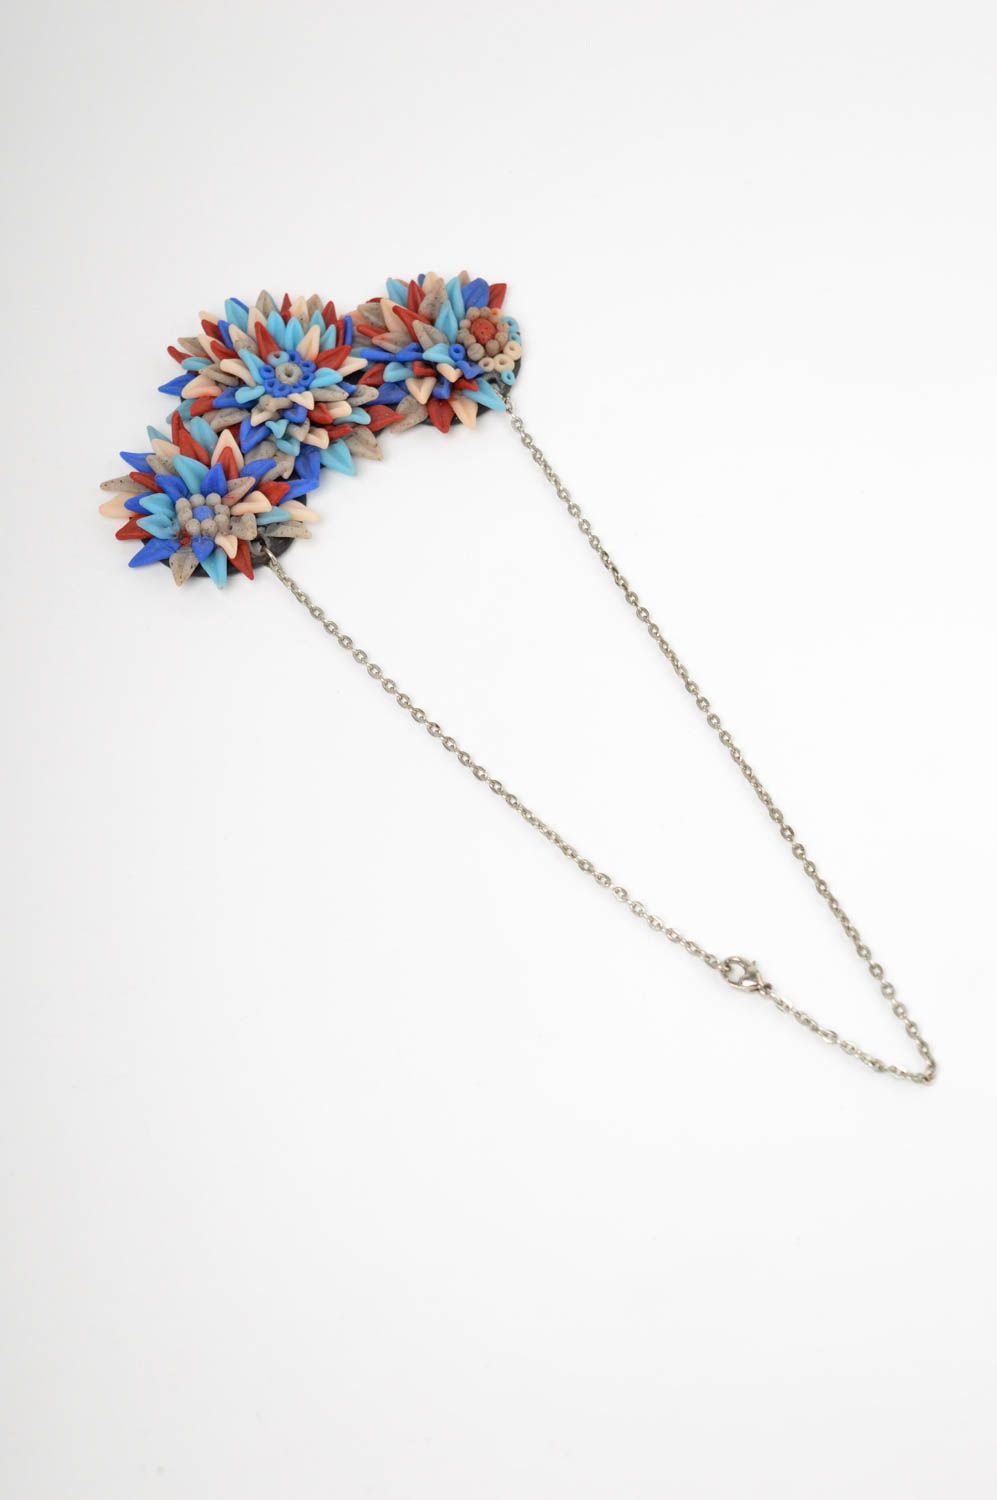 Flower necklace handmade plastic jewelry for women flower pendant for girls photo 4